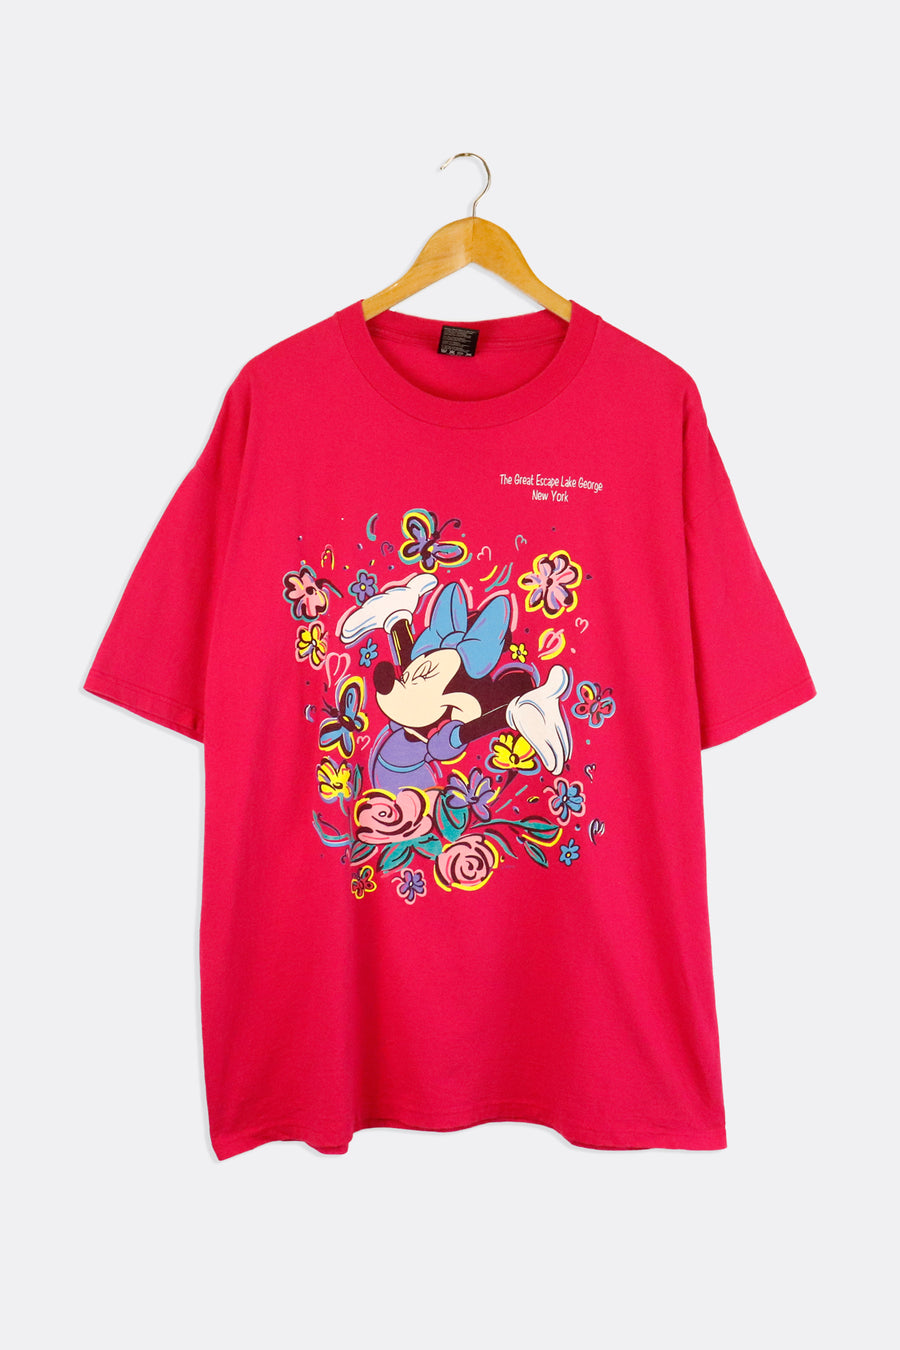 Vintage Disney The Great Escape Lake George New York Minnie Mouse Flowers T Shirt Sz XL